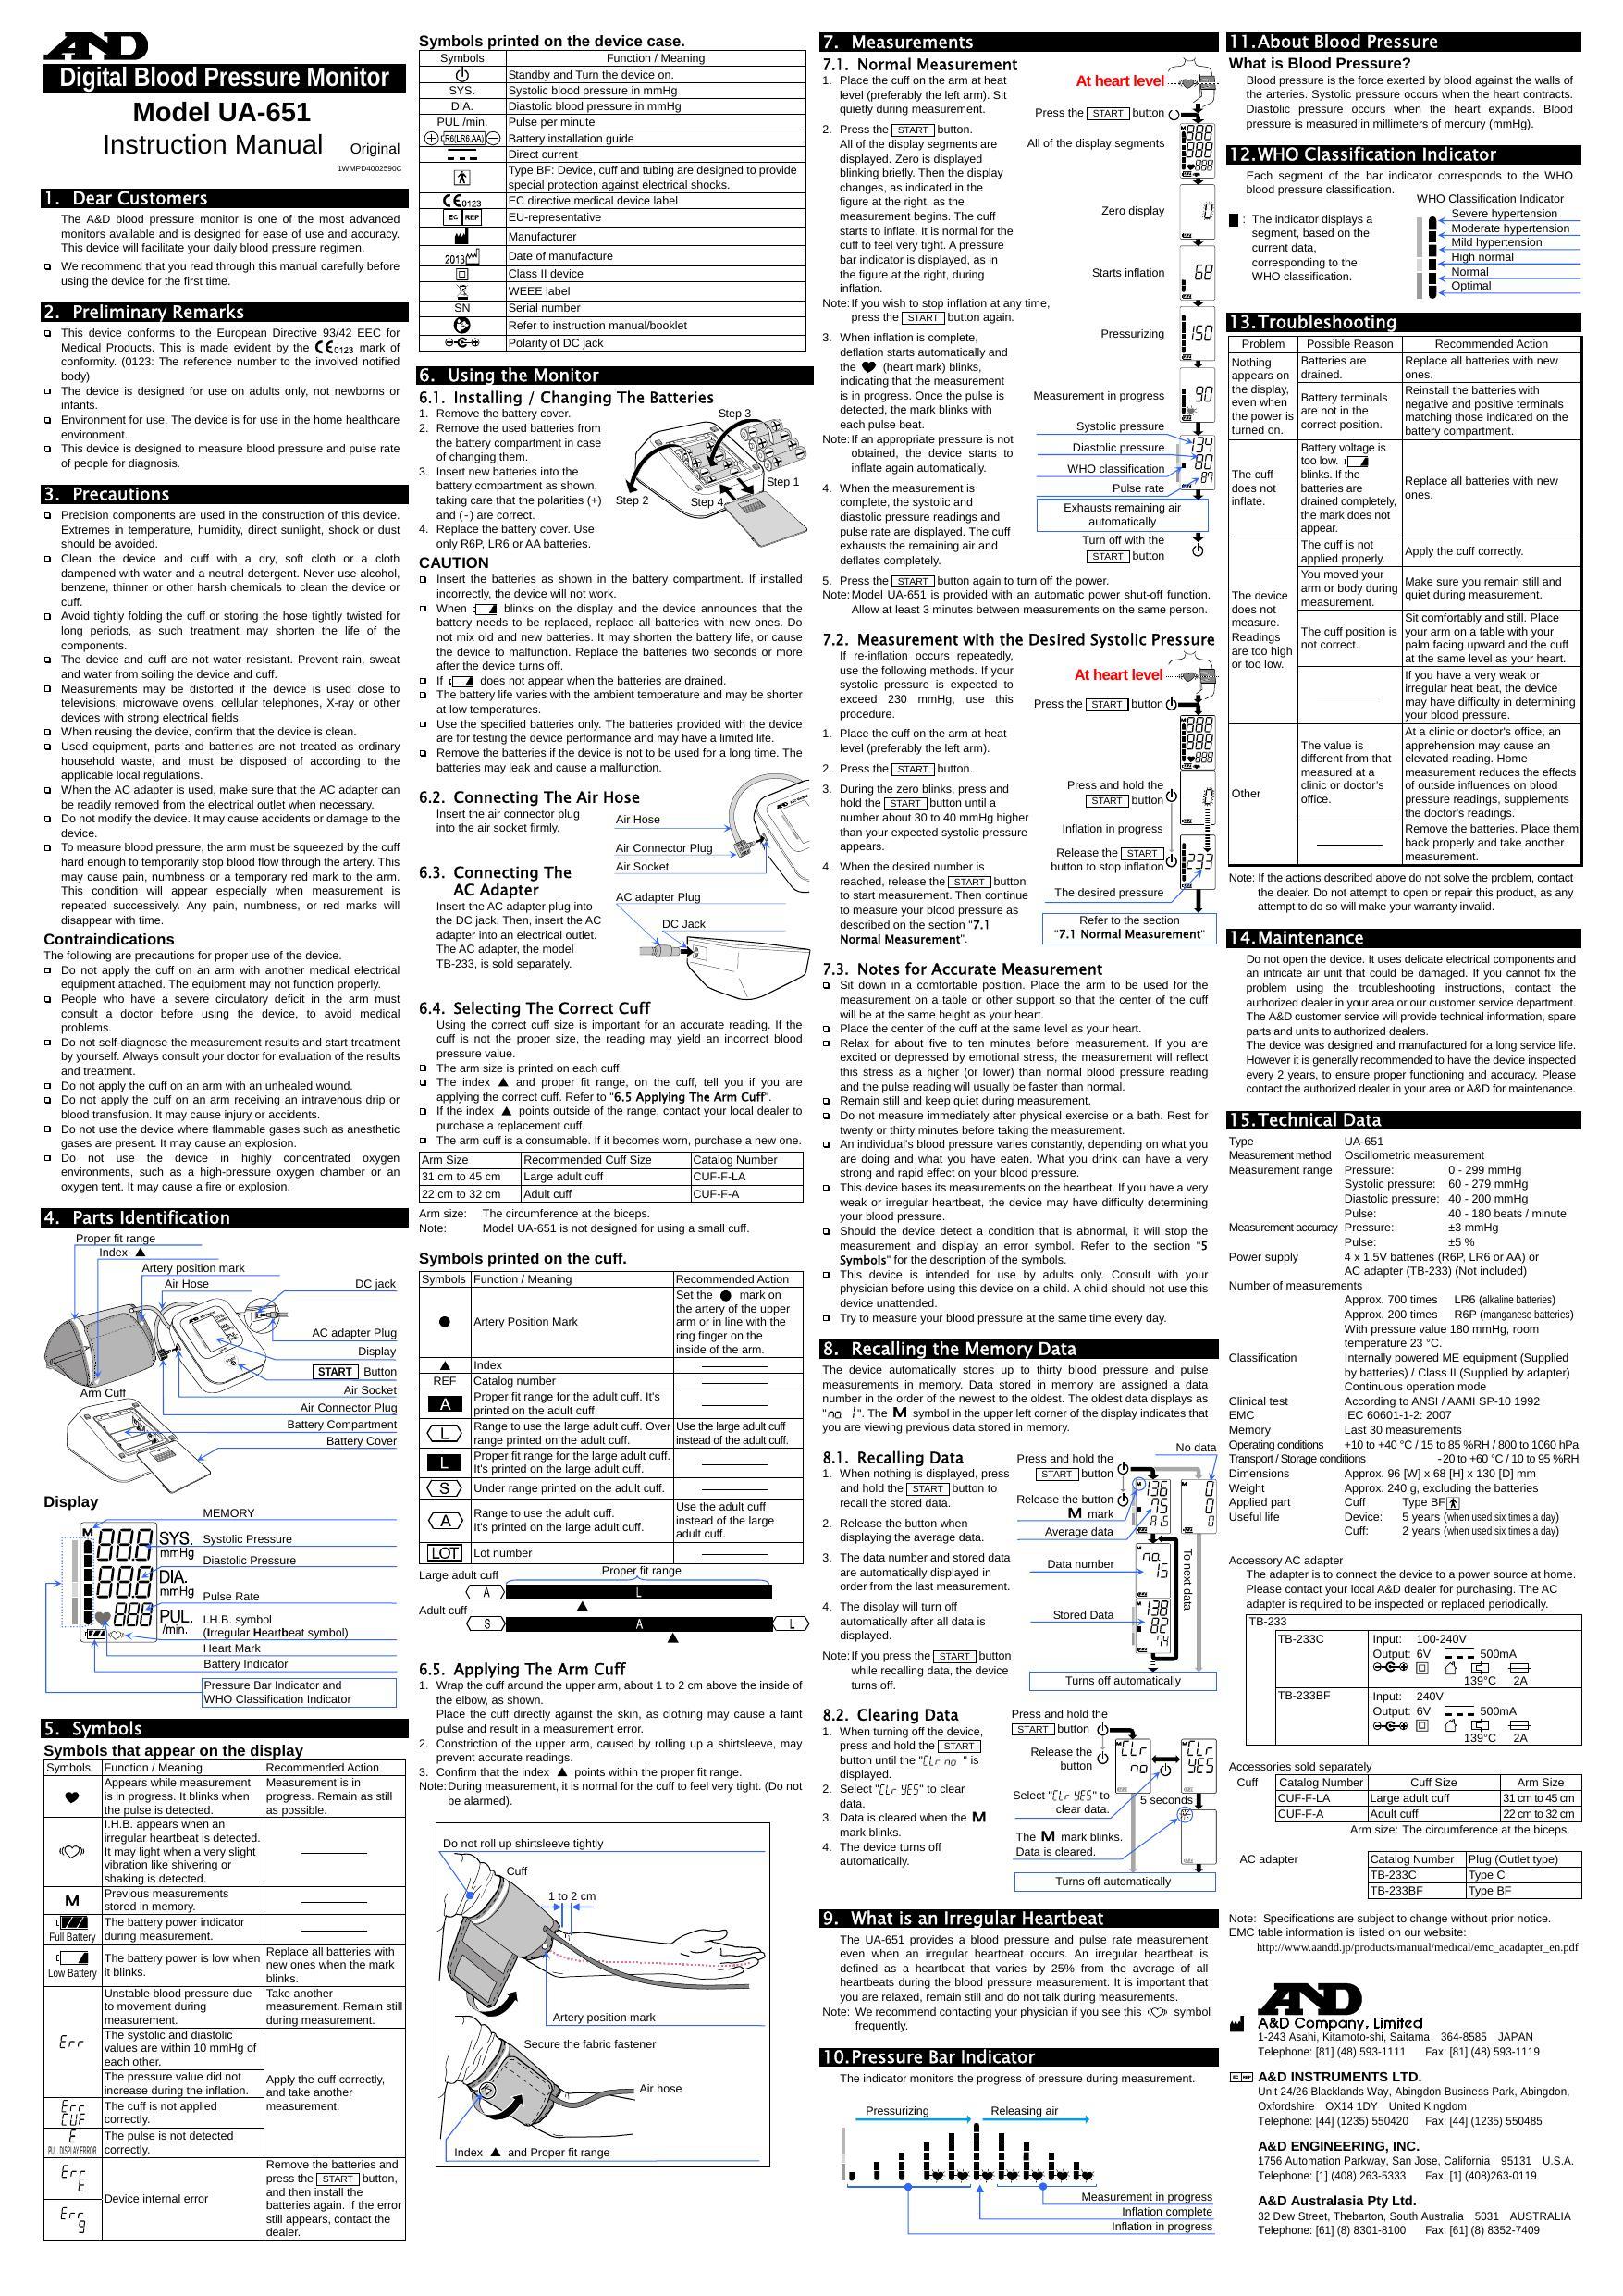 ad-medical-device-user-manual---model-ua-651.pdf